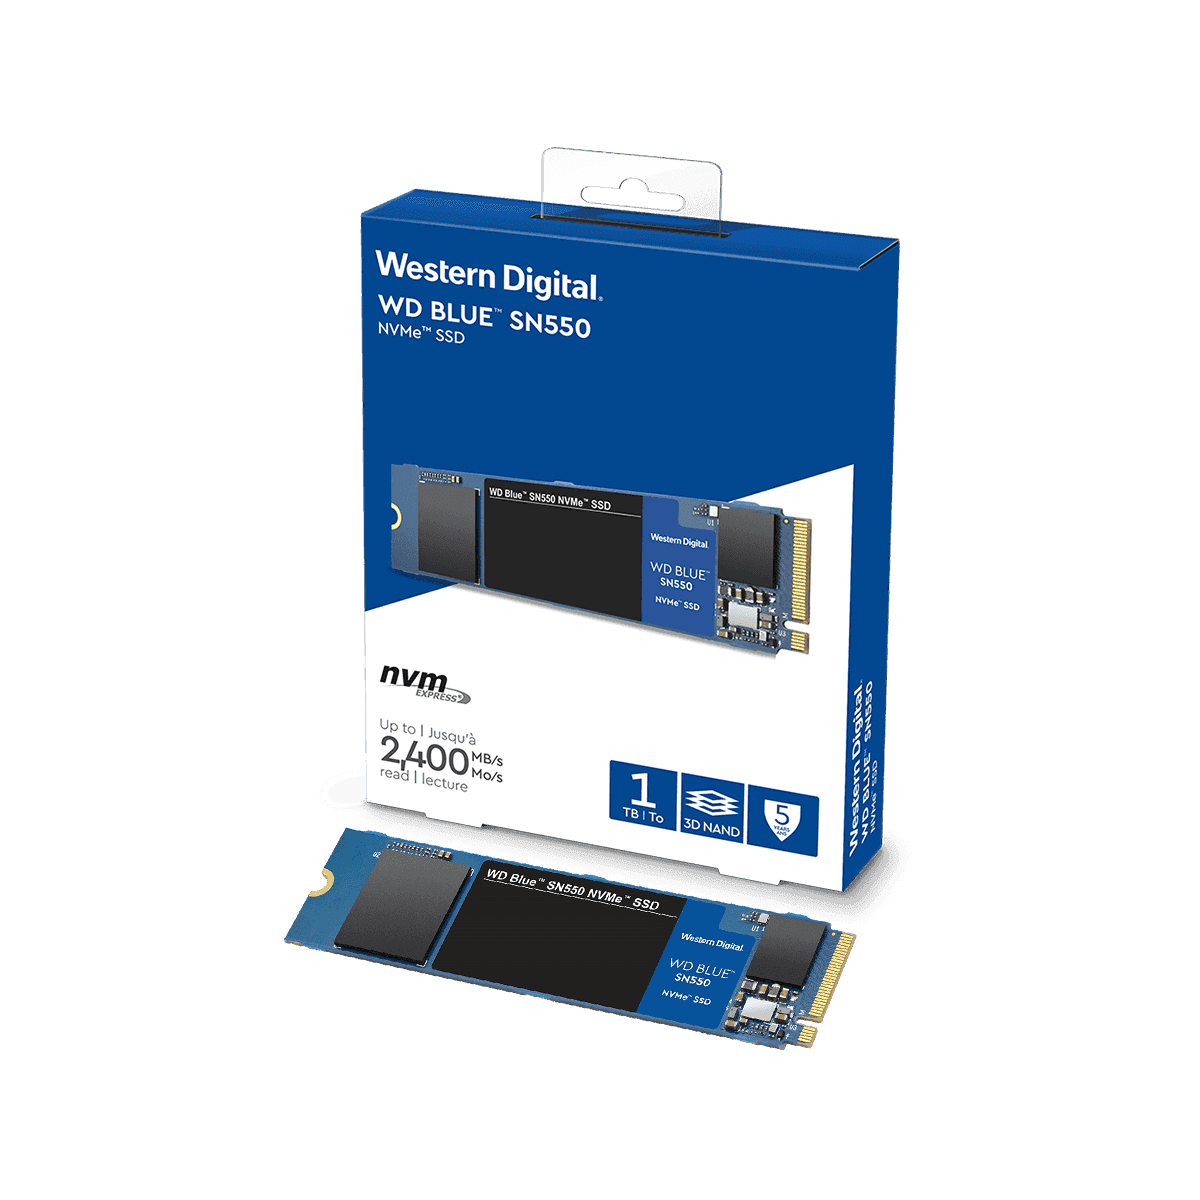 【販売終了】WesternDigital製 WD BLUE SN550シリーズ NVMe M.2 SSD 1TB WDS100T2B0C